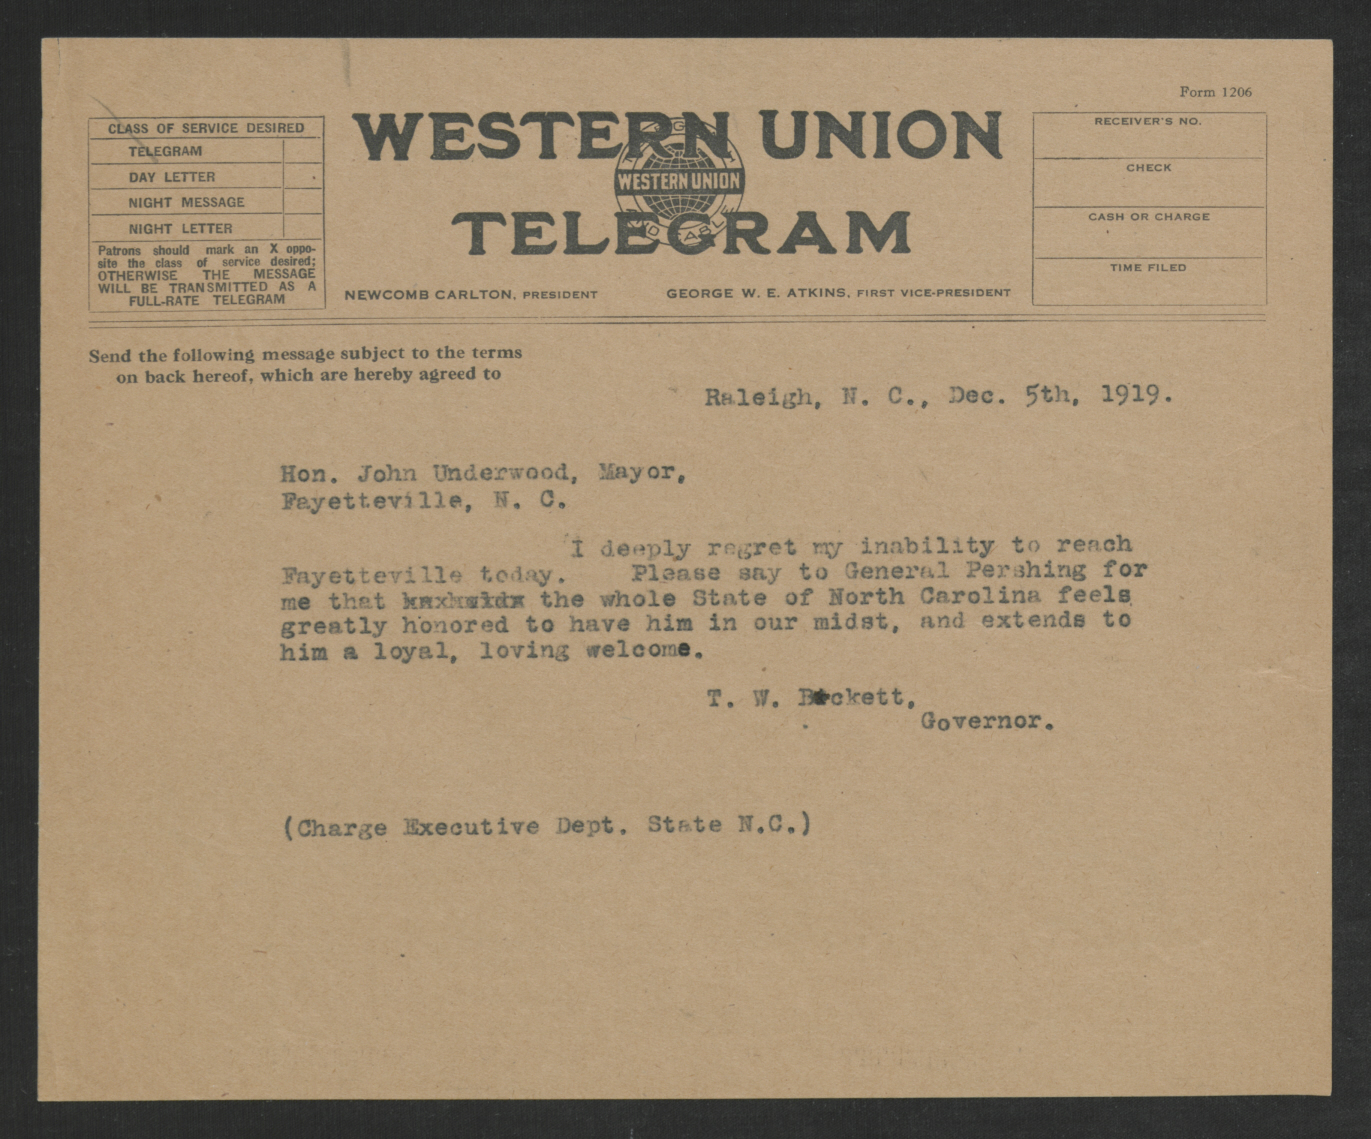 Telegram from Thomas W. Bickett to John Underwood, December 5, 1919